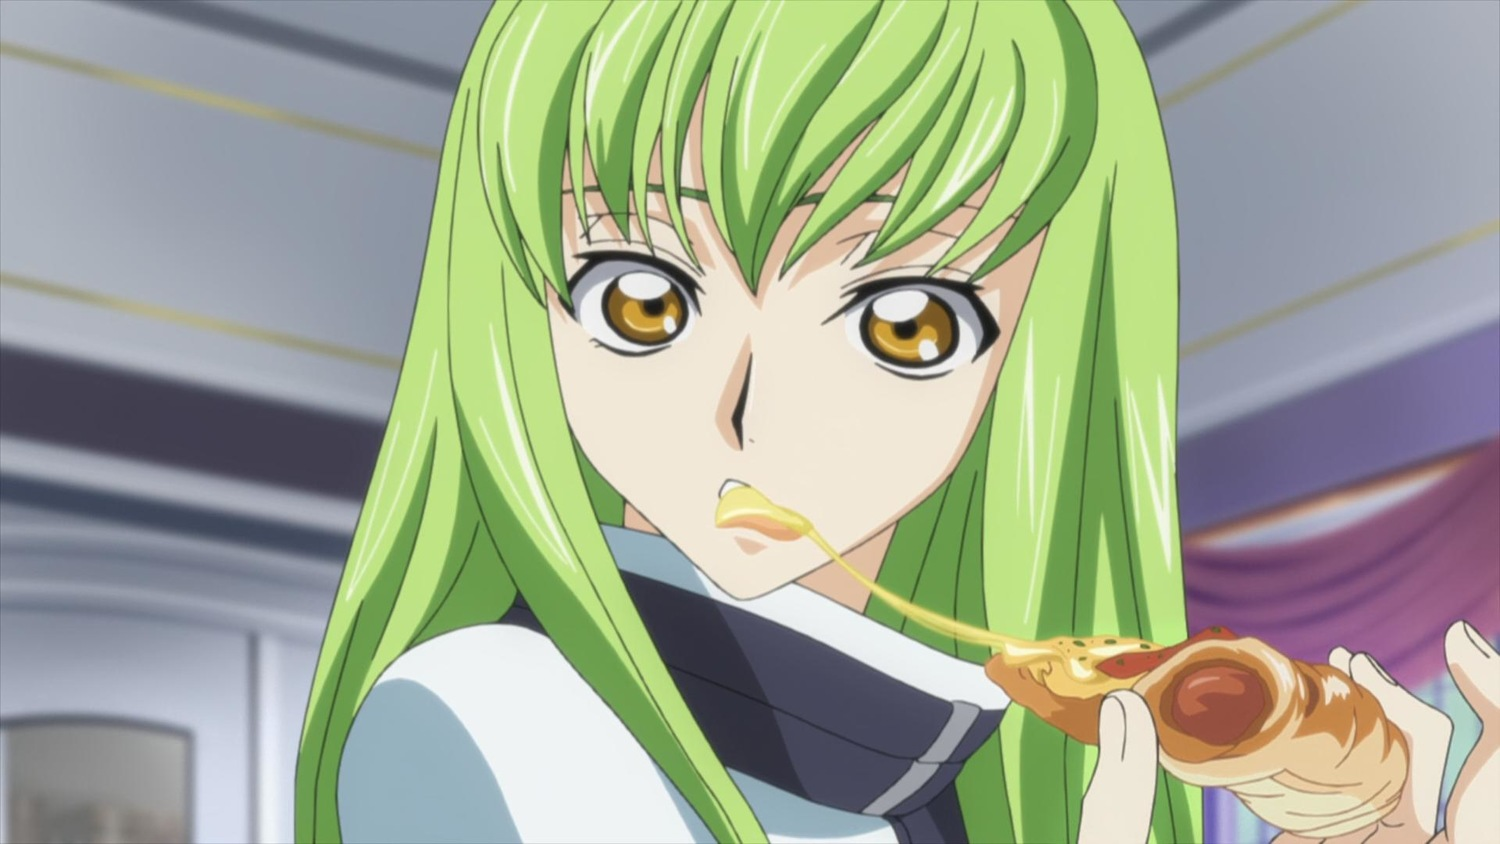 Anime Romance - Pizza time 🍕 Anime/Manga = Code Geass